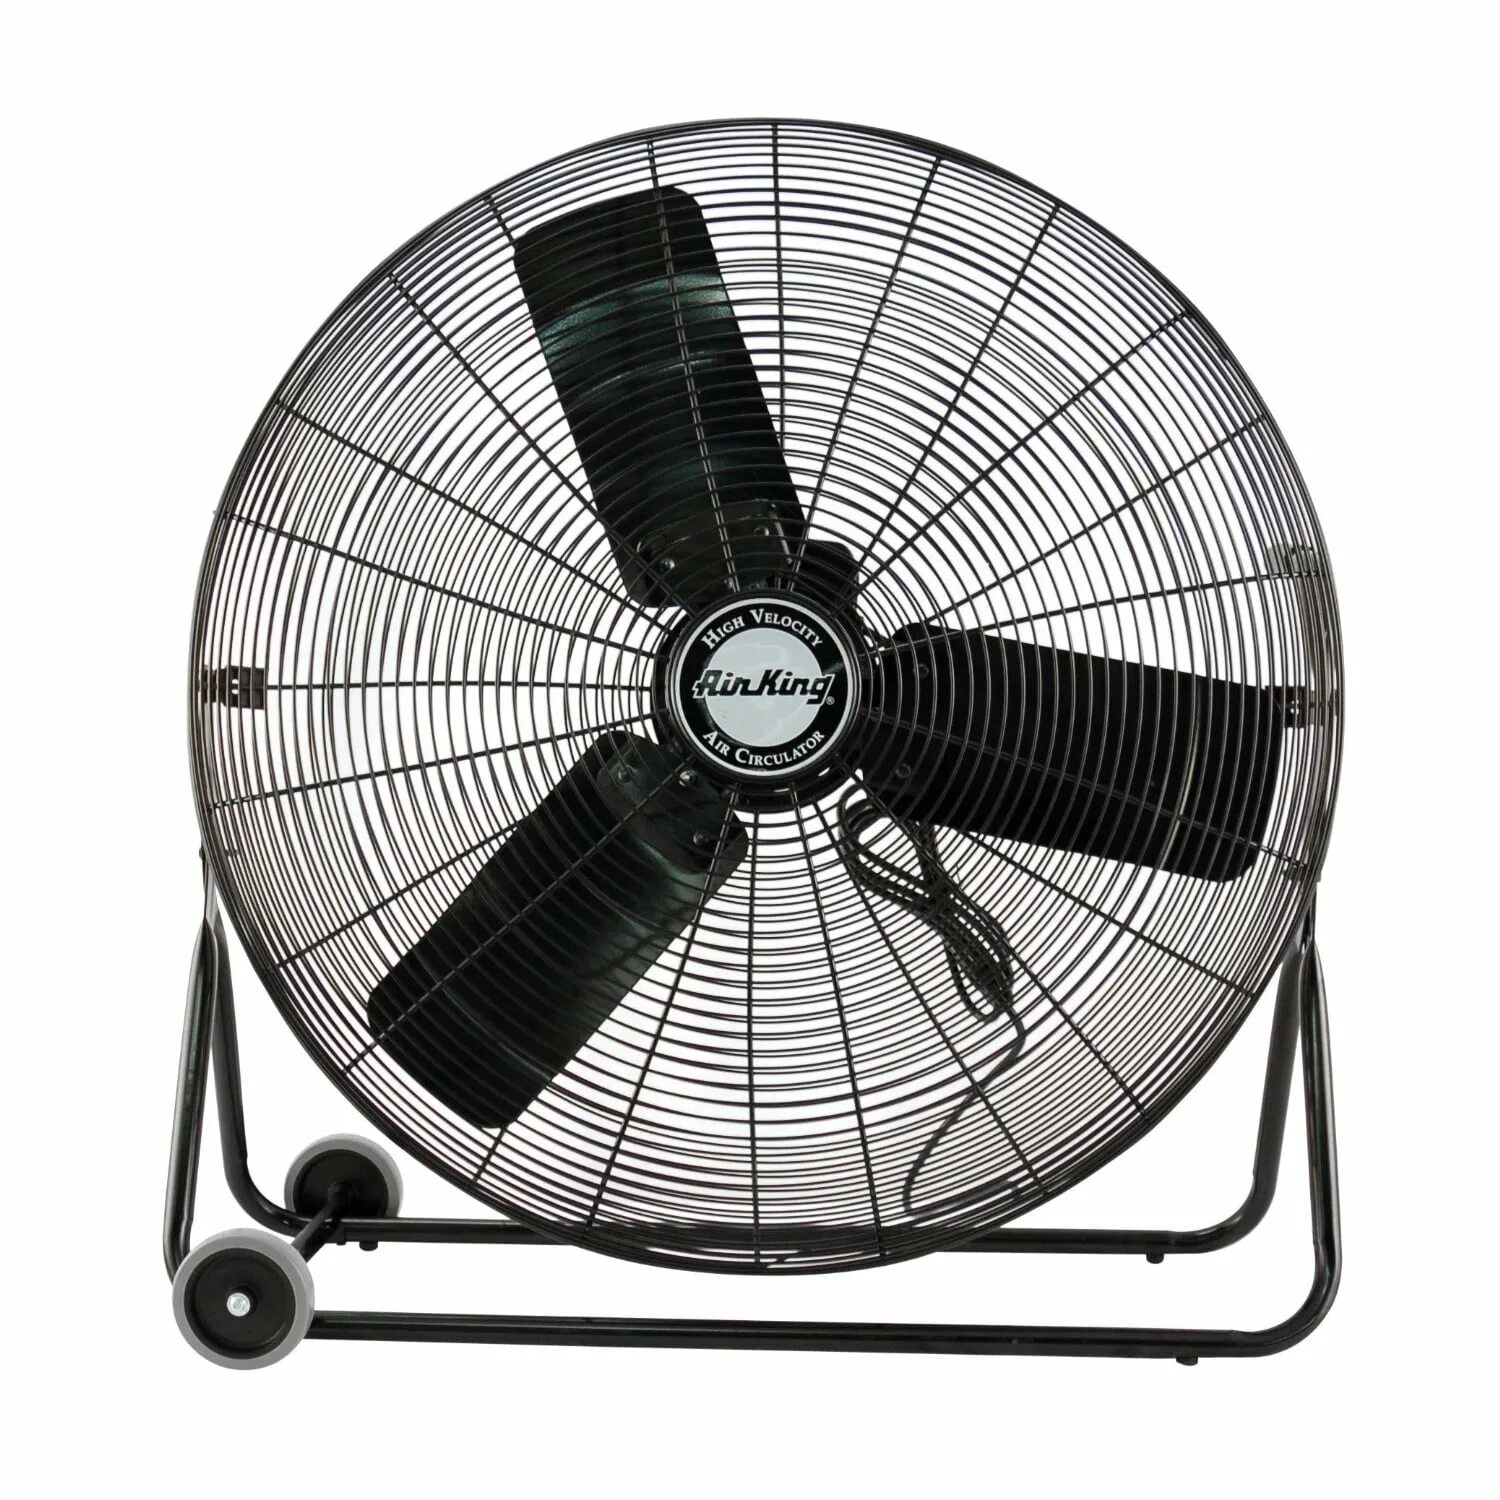 Вентилятор напольный Changli Crown 16 Stand Fan. Вентилятор Duofa Industrial. Вентилятор Brando FS-4521 Темир. Промышленный вентилятор на колесах. Fan n